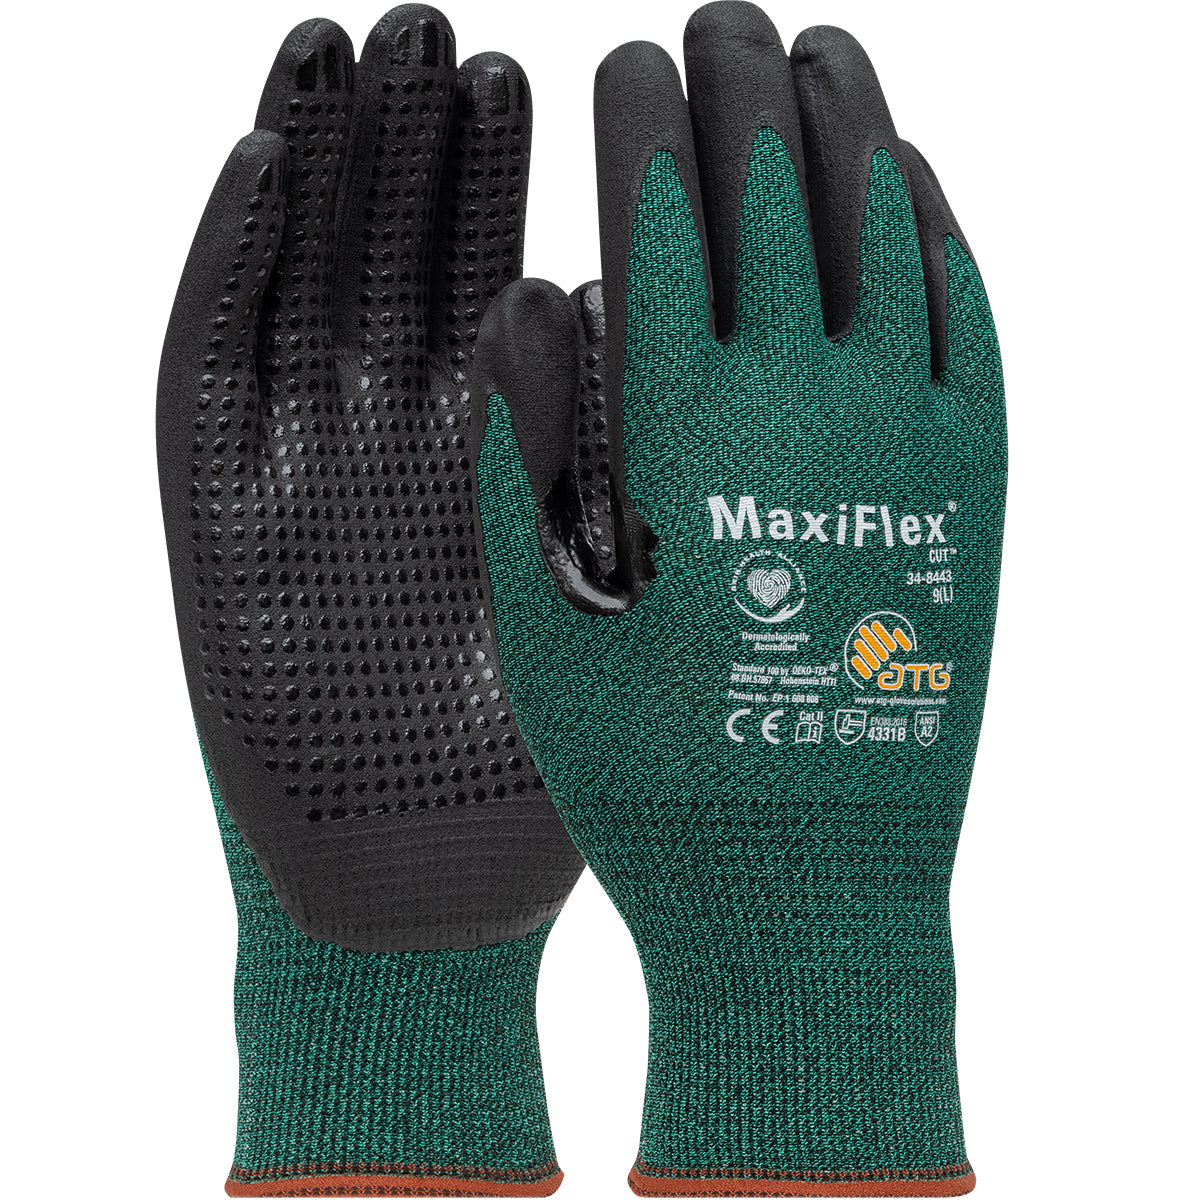 PIP ATG 34-8443 MaxiFlex Cut Gloves, ANSI A2 EN 3, Dotted Palms, Nitrile Micro-Foam, Green (1 DZ)